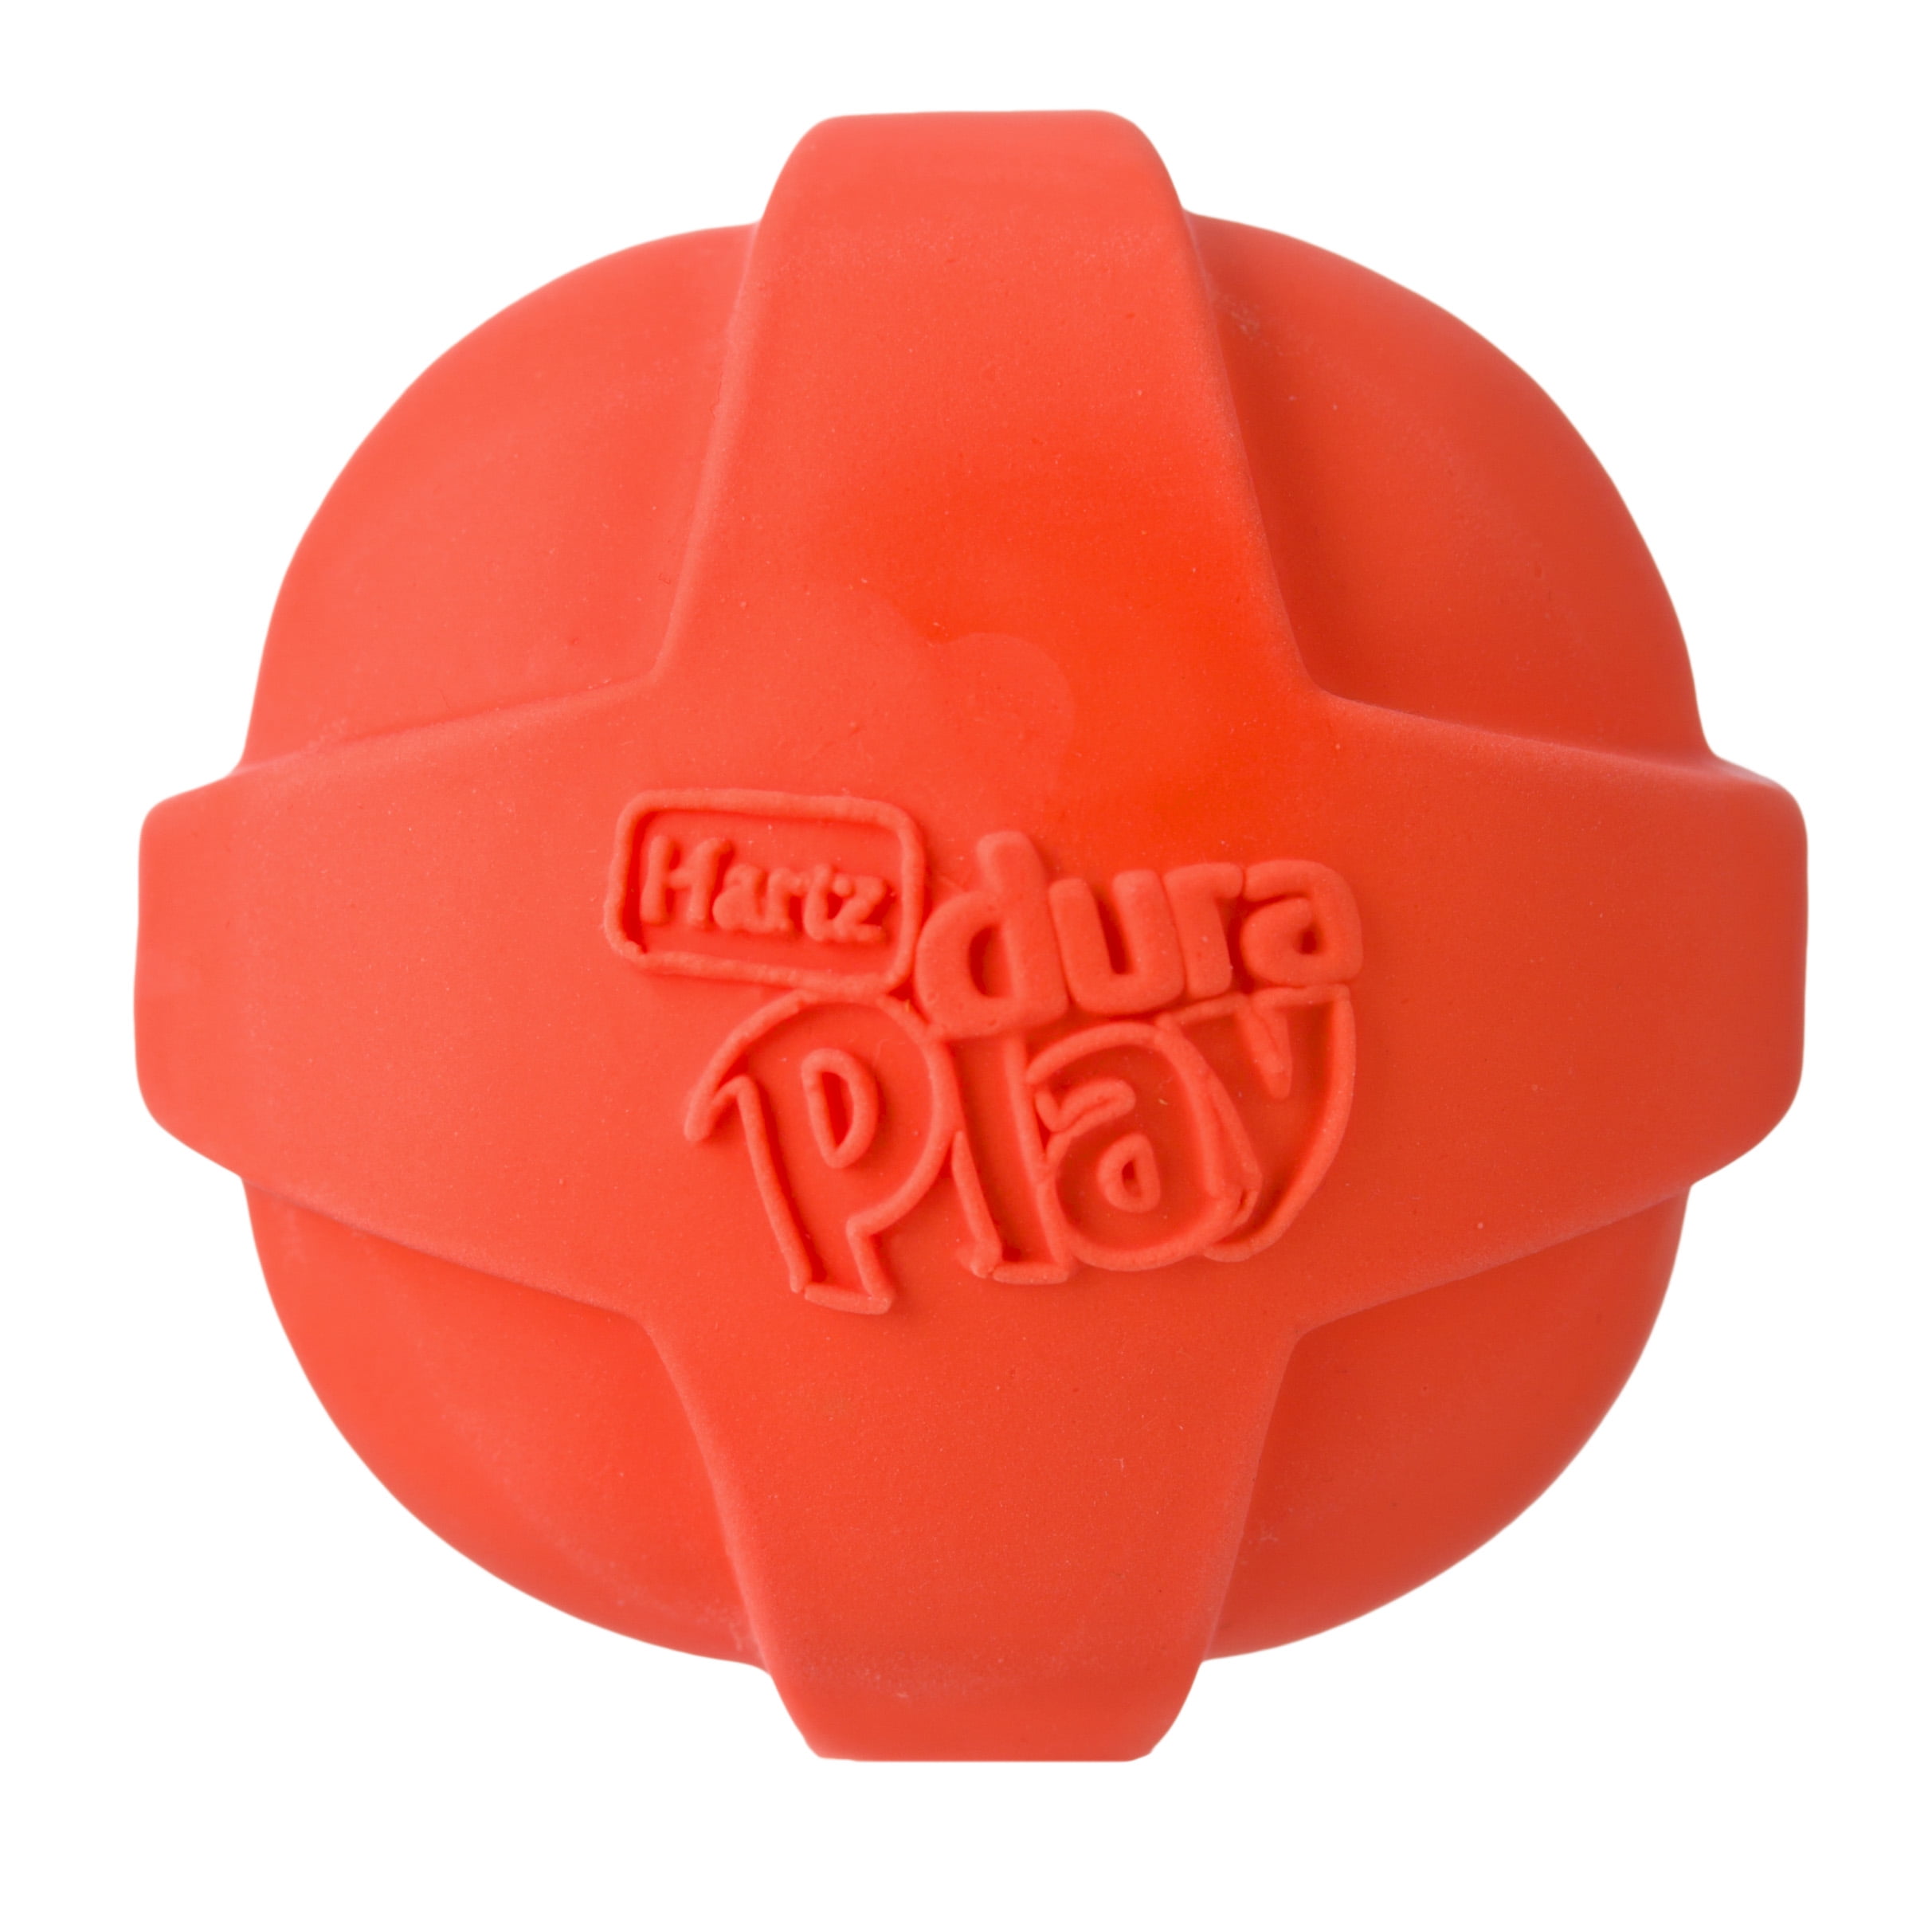 Hartz Dura Play Ball Dog Toy, Medium, Color May Vary 